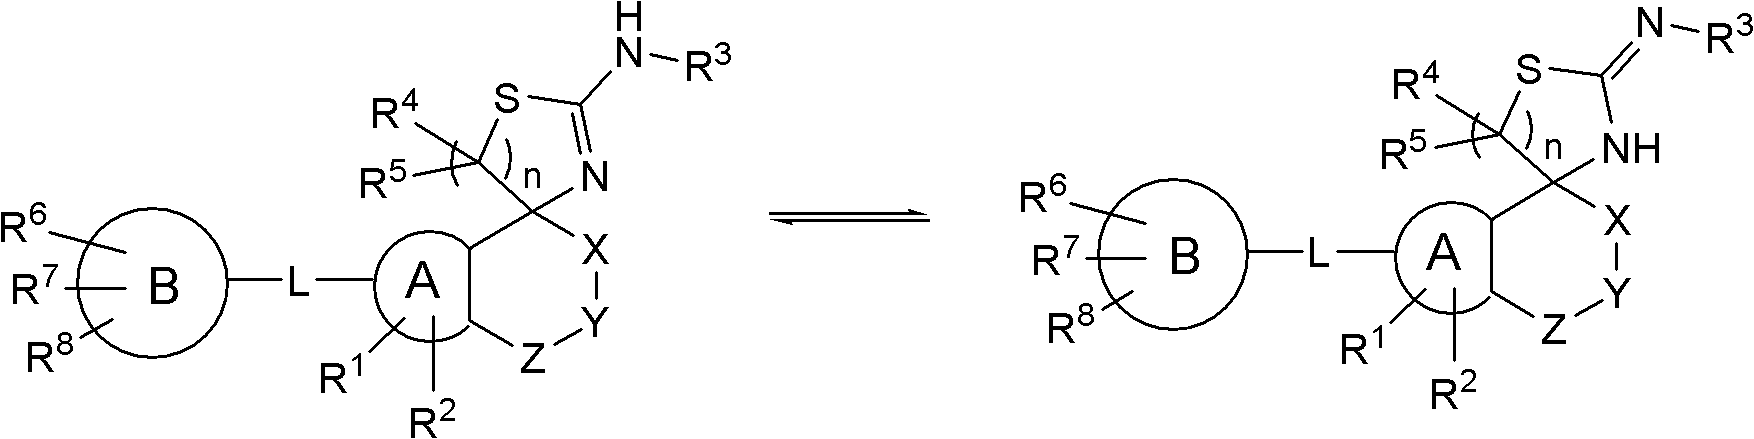 Spiroaminodihydrothiazine derivatives